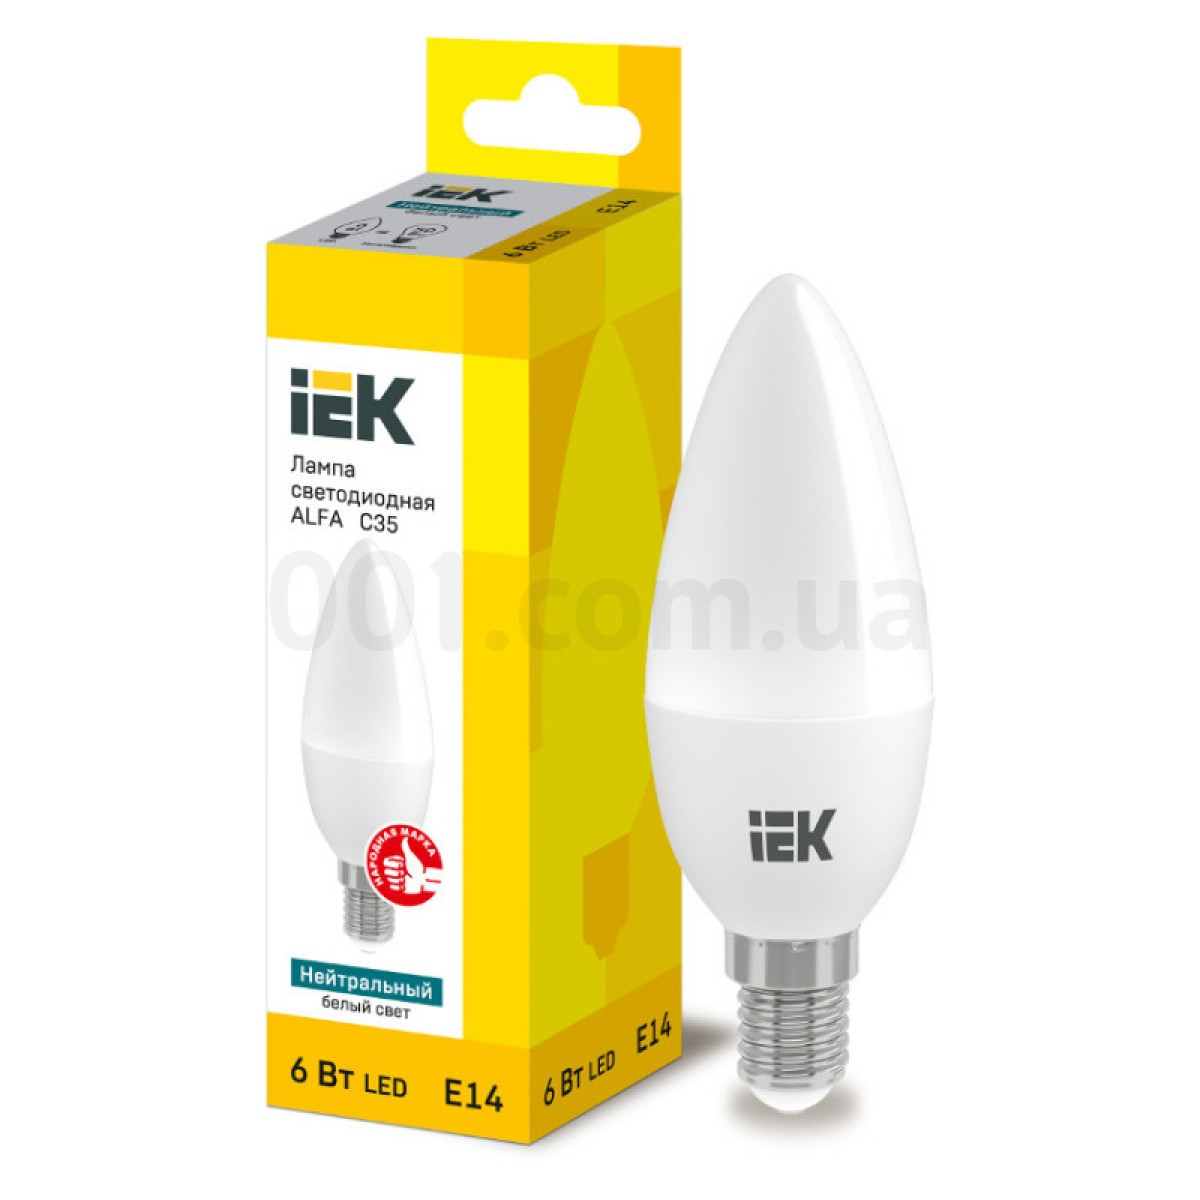 Светодиодная лампа LED ALFA C35 (свеча) 6 Вт 230В 4000К E14, IEK 256_256.jpg